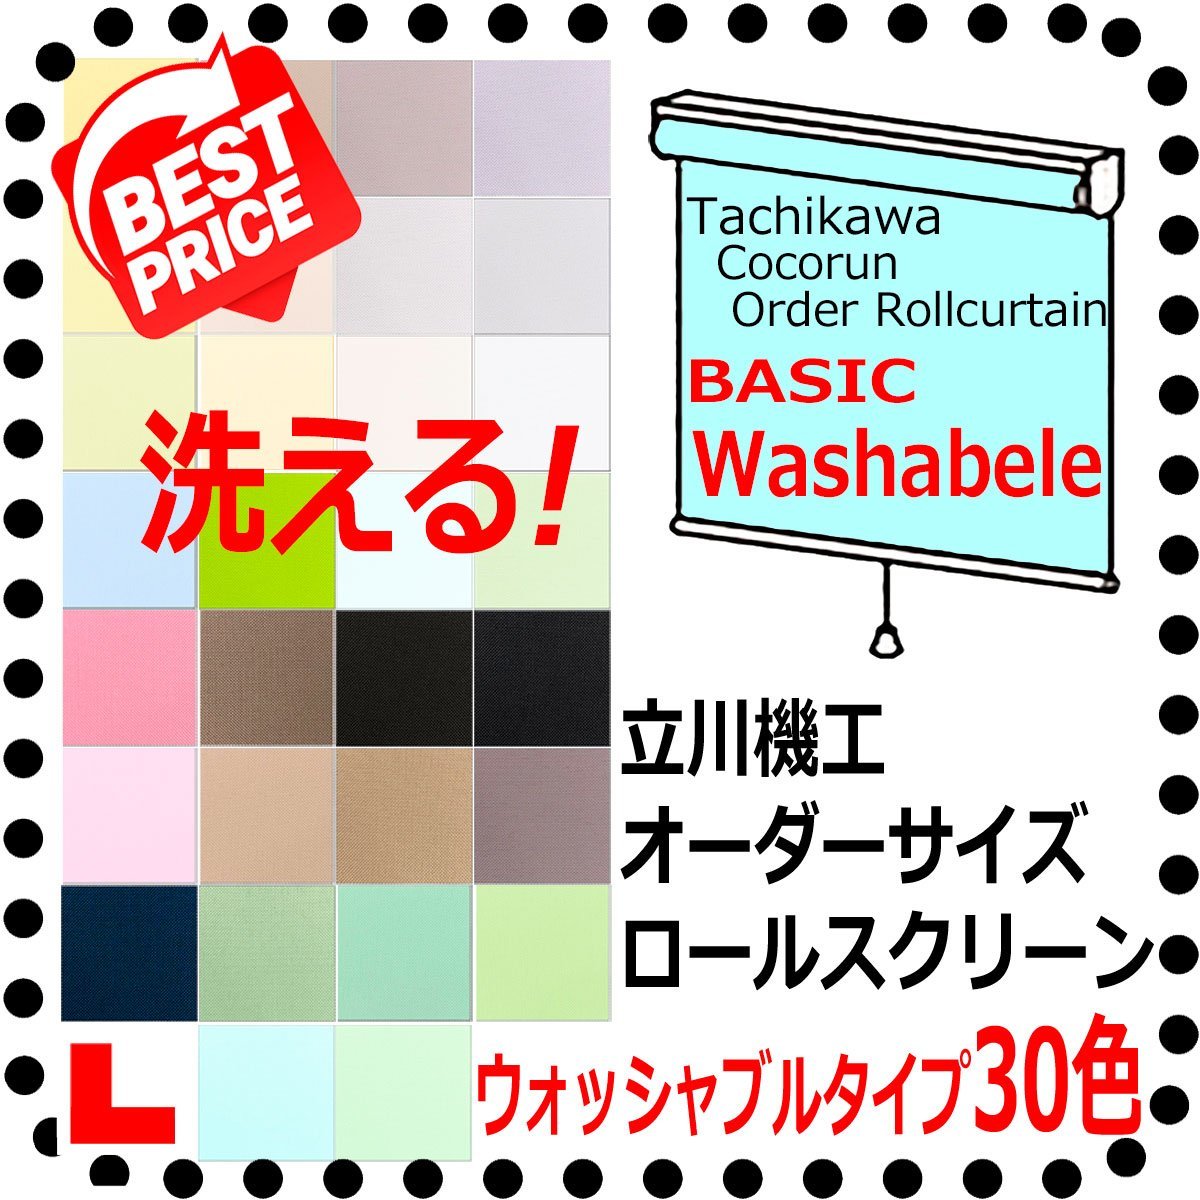  Tachikawa заказ roll занавески здесь runBASIC... омыватель bru модель ширина [30~40cm]X высота [181~200cm]